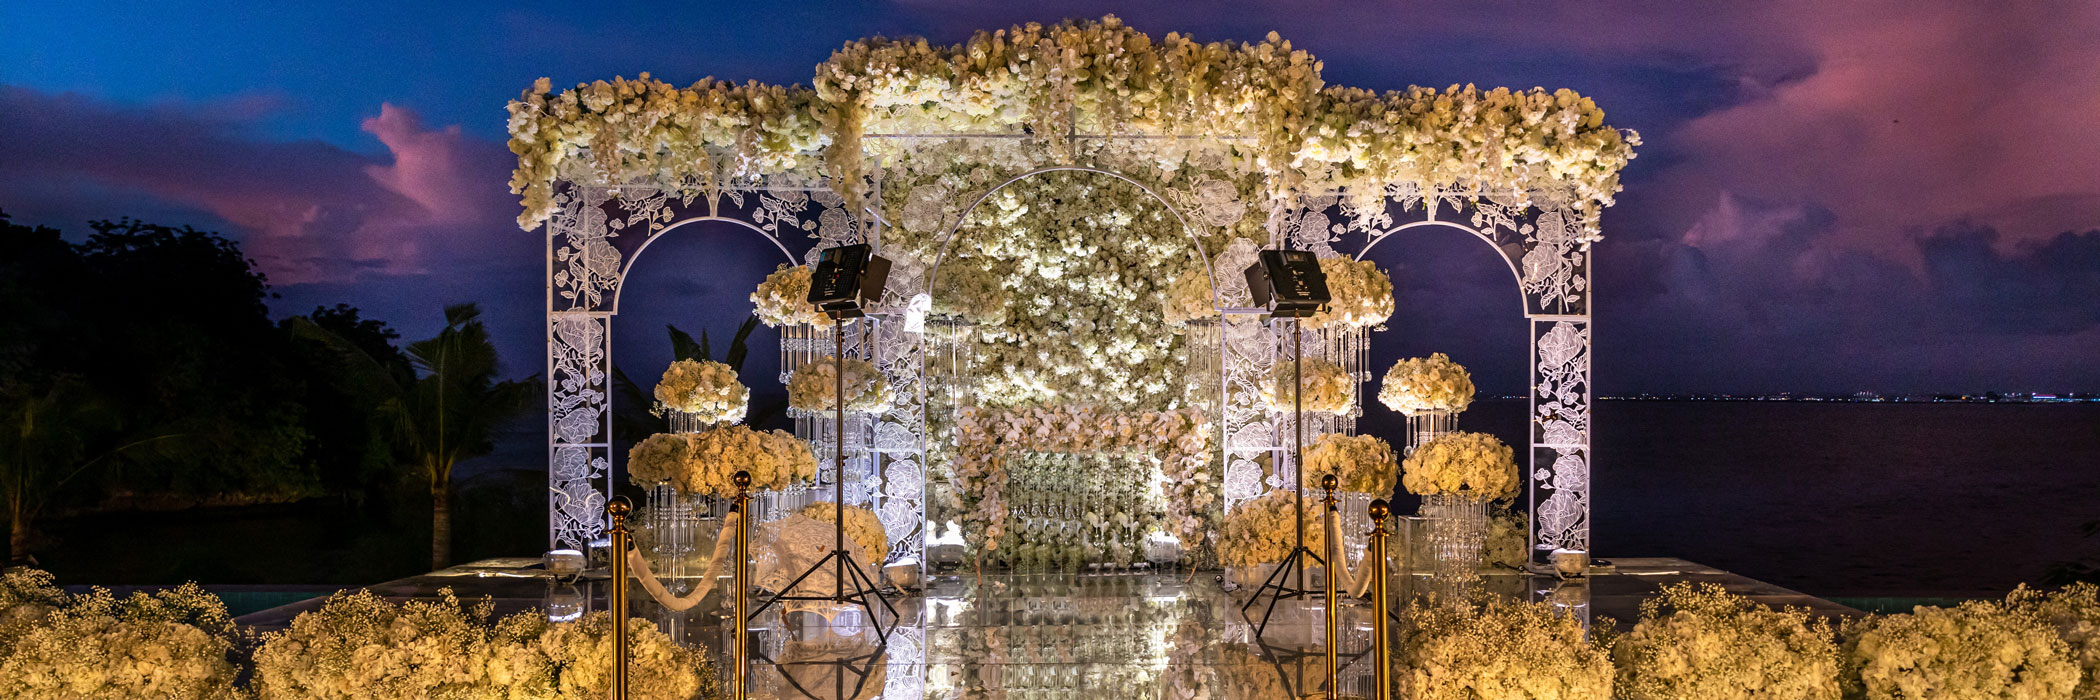 Raffles Bali - Raffles Bali Presents an Unforgettable Intimate Wedding Experience amidst Breathtaking Backdrops